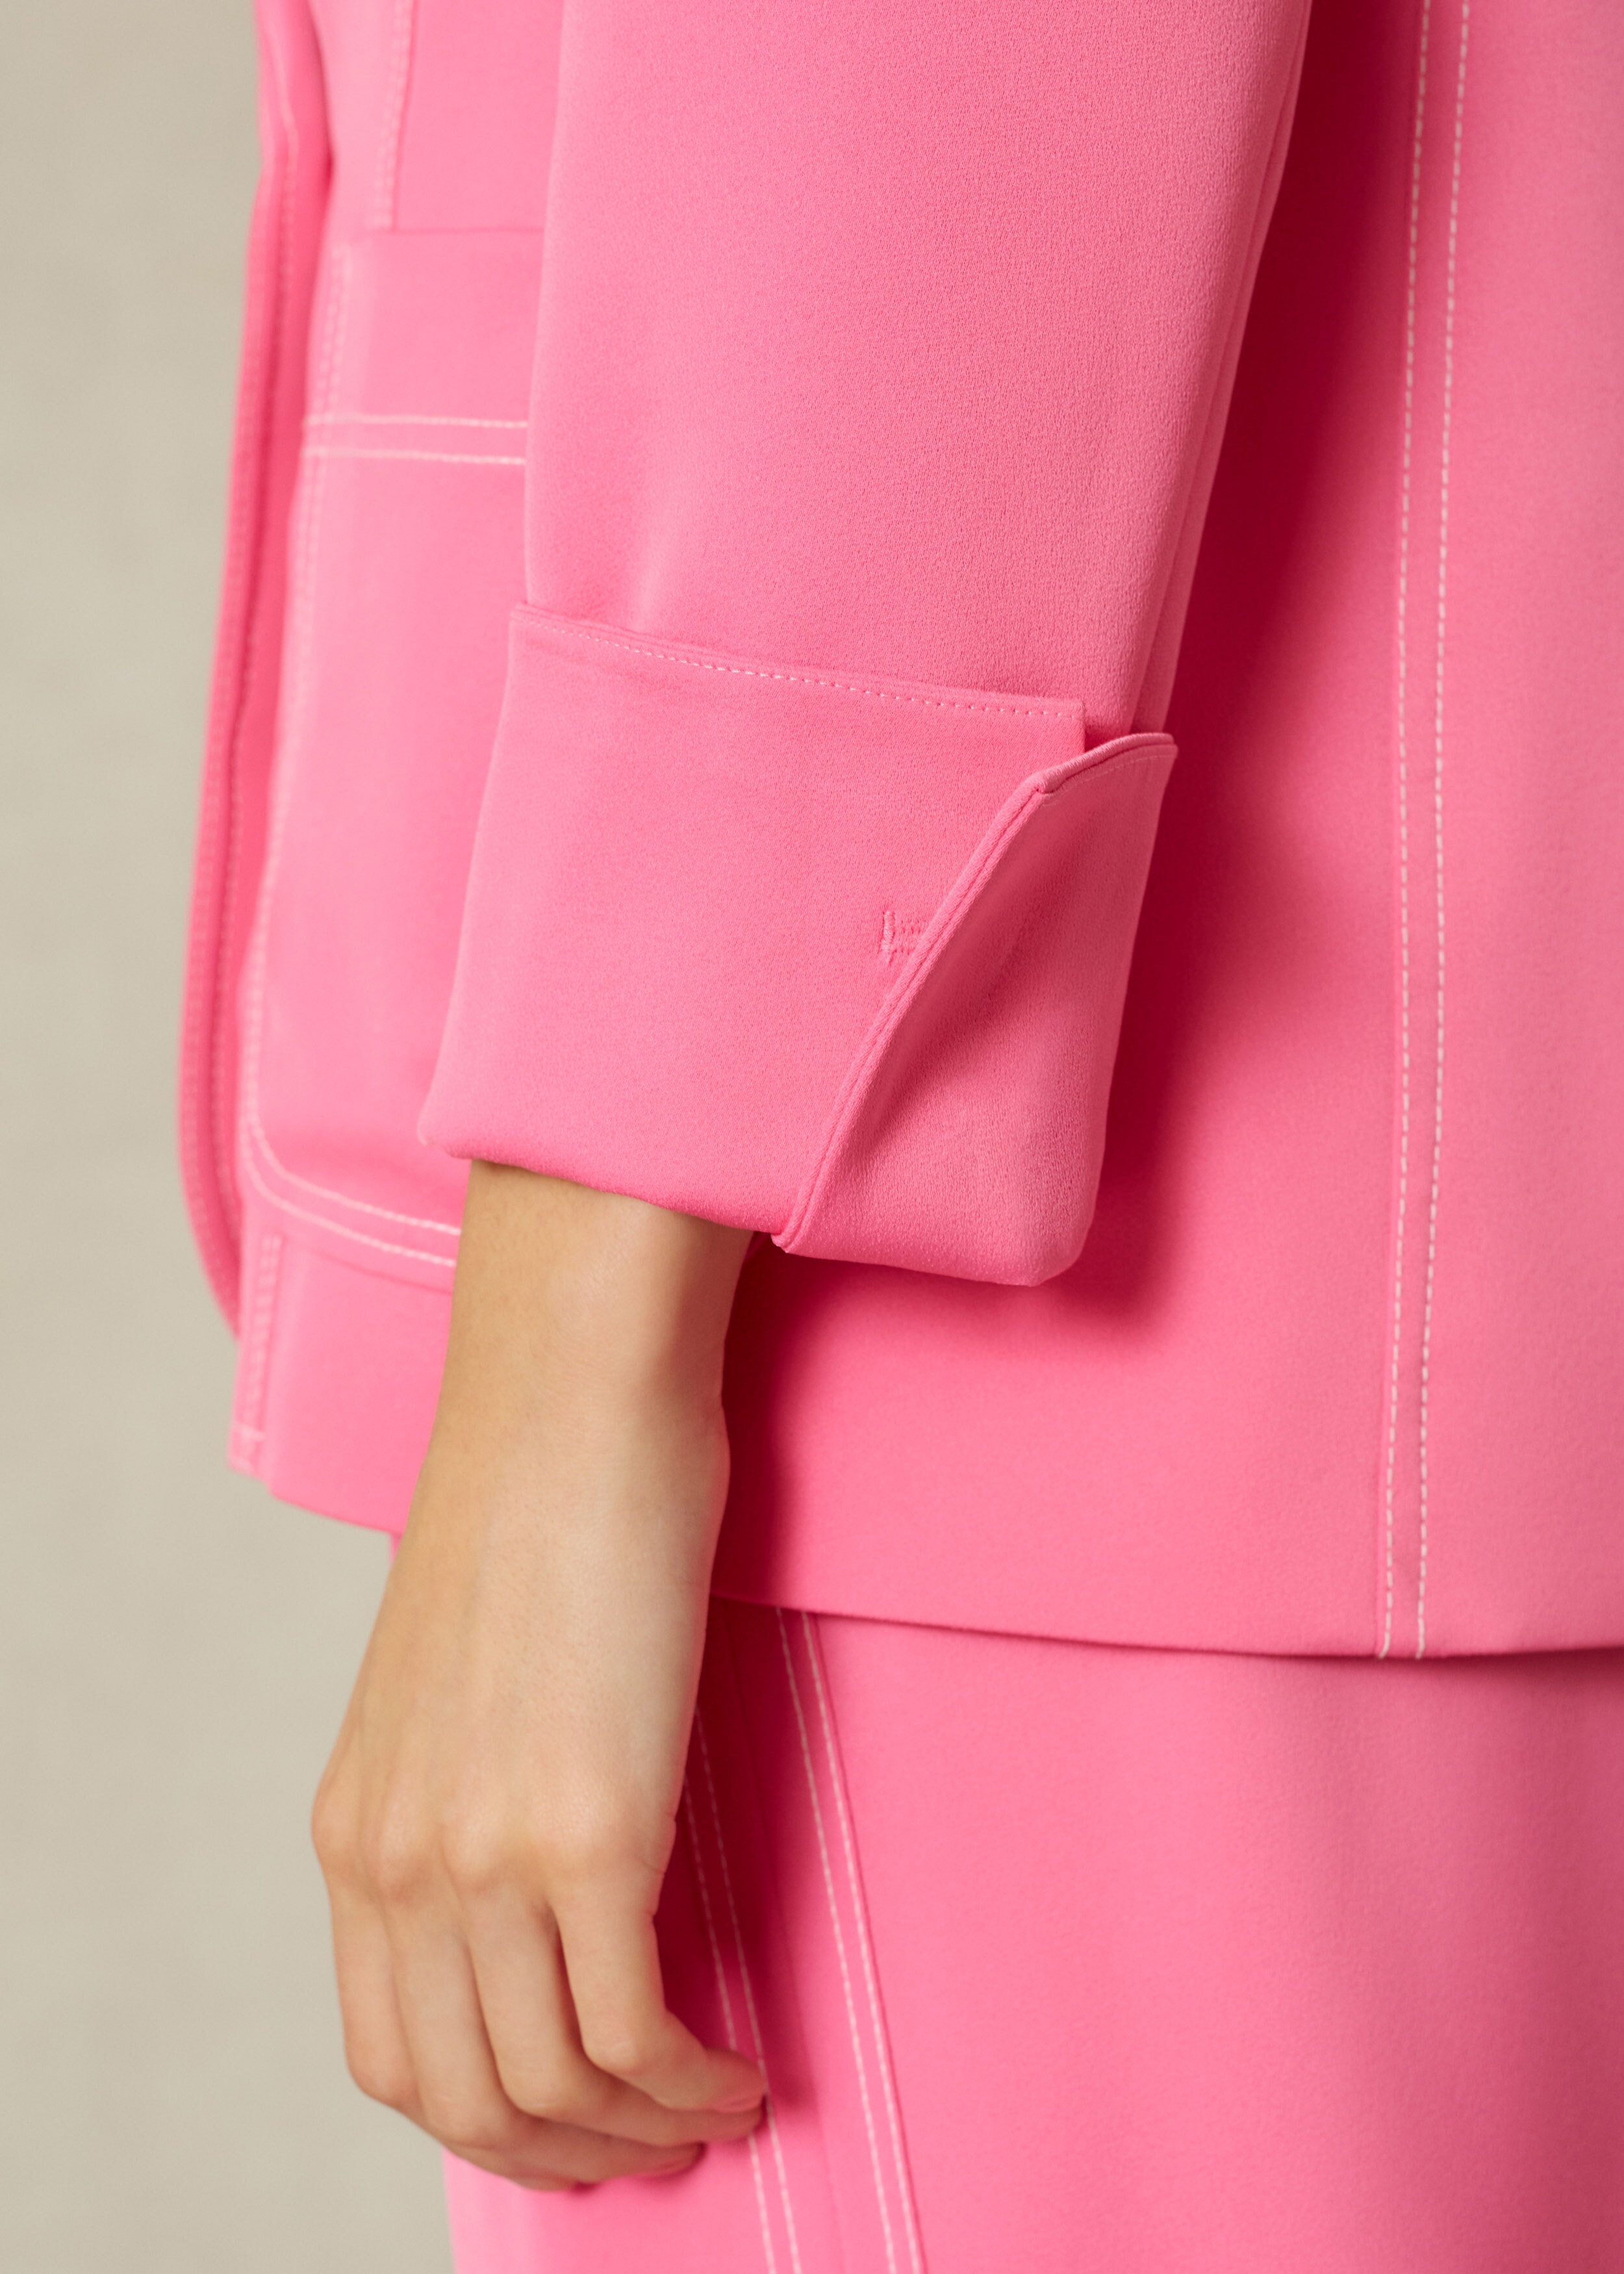 Statement Suit Jacket Bright Pink